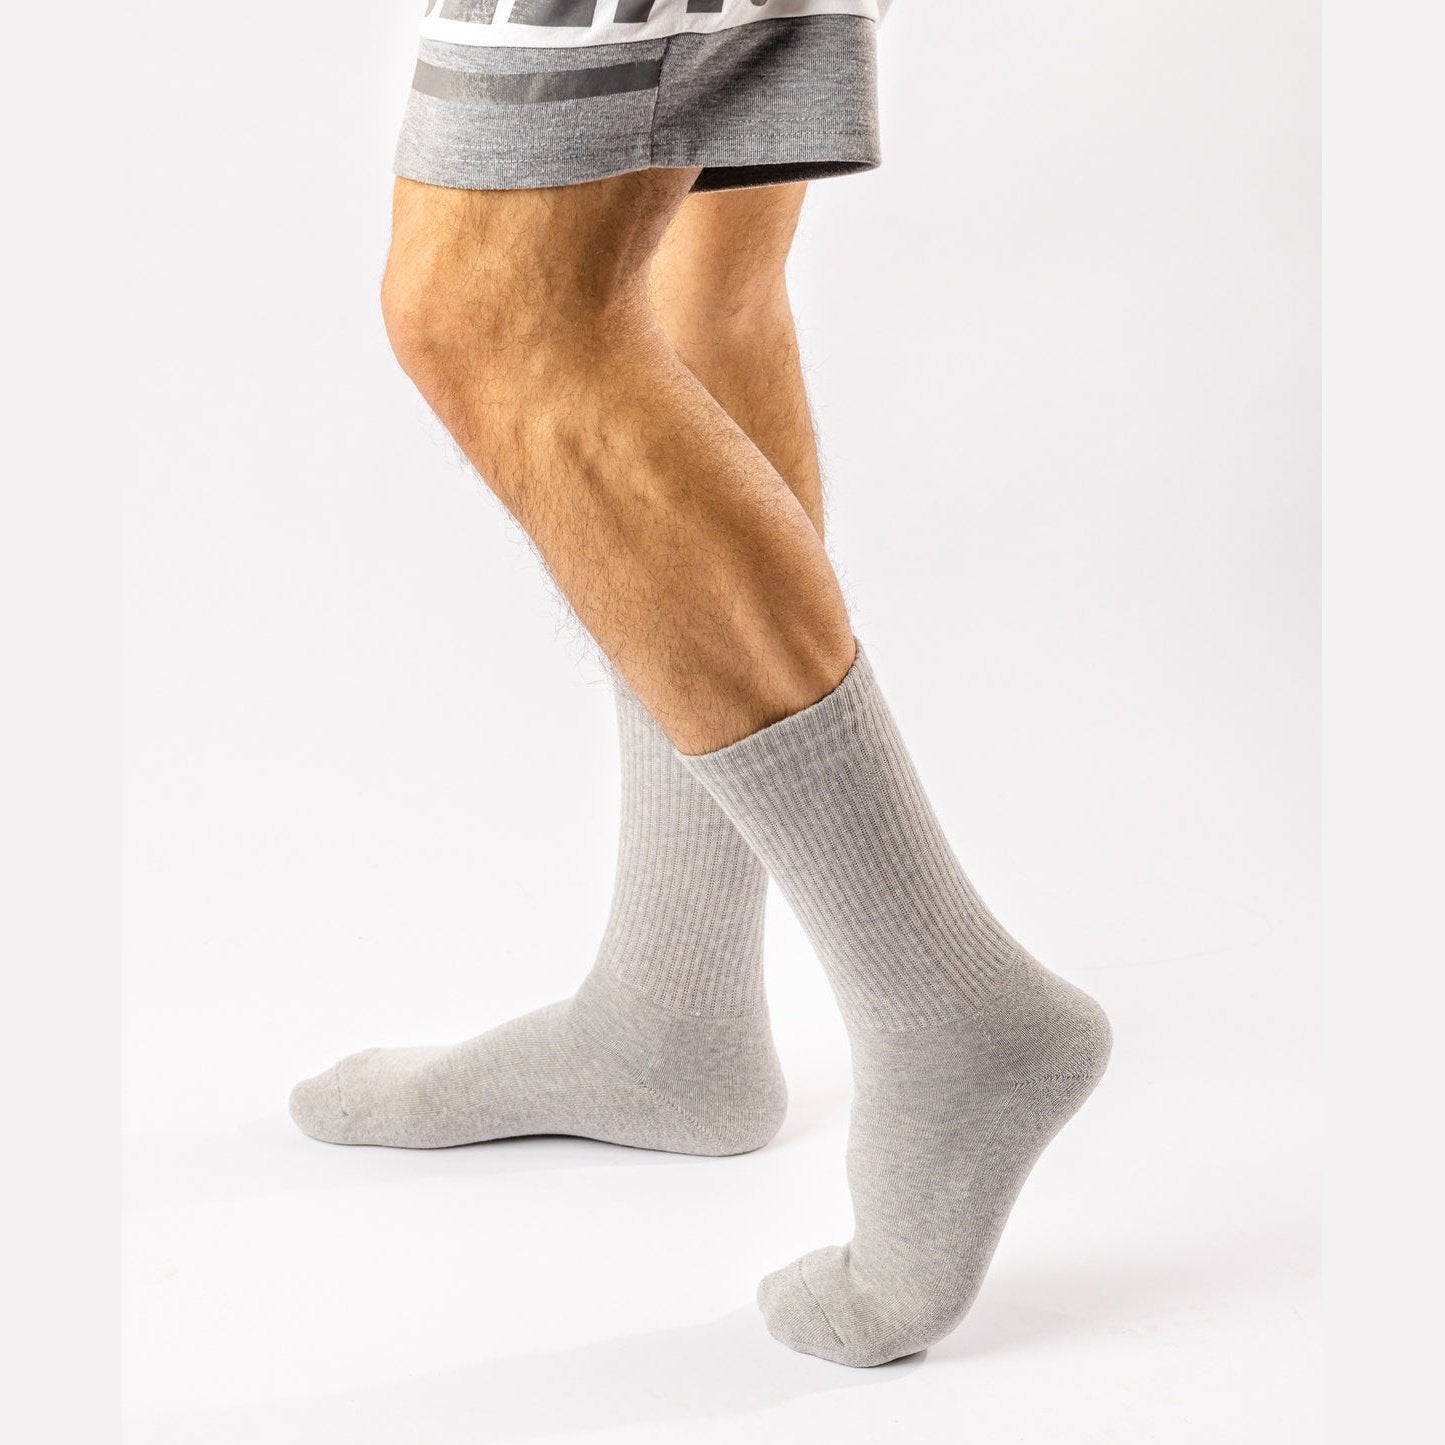 Black & Grey Mid Cut Crew Socks 2 Pack - Sporty Pro